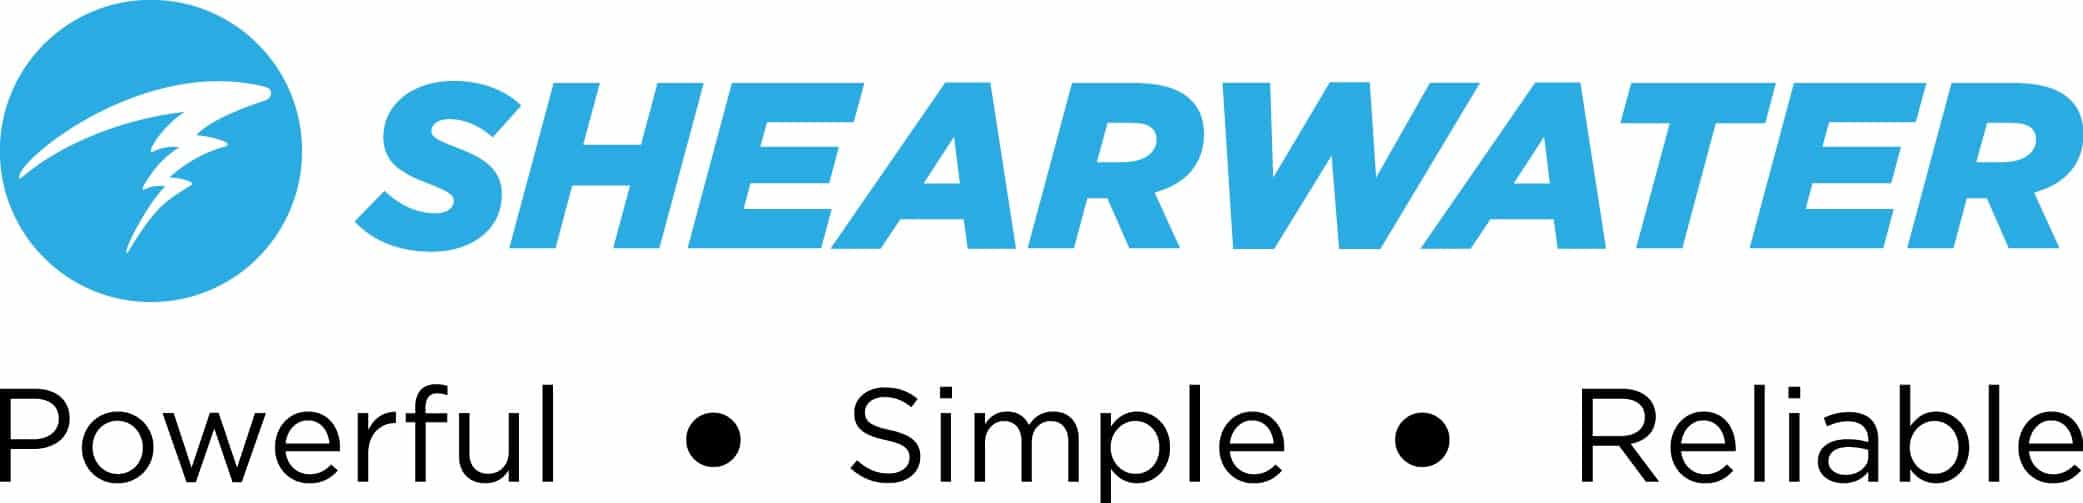 Shearwater Fullcolor Logo Slogan Rgb